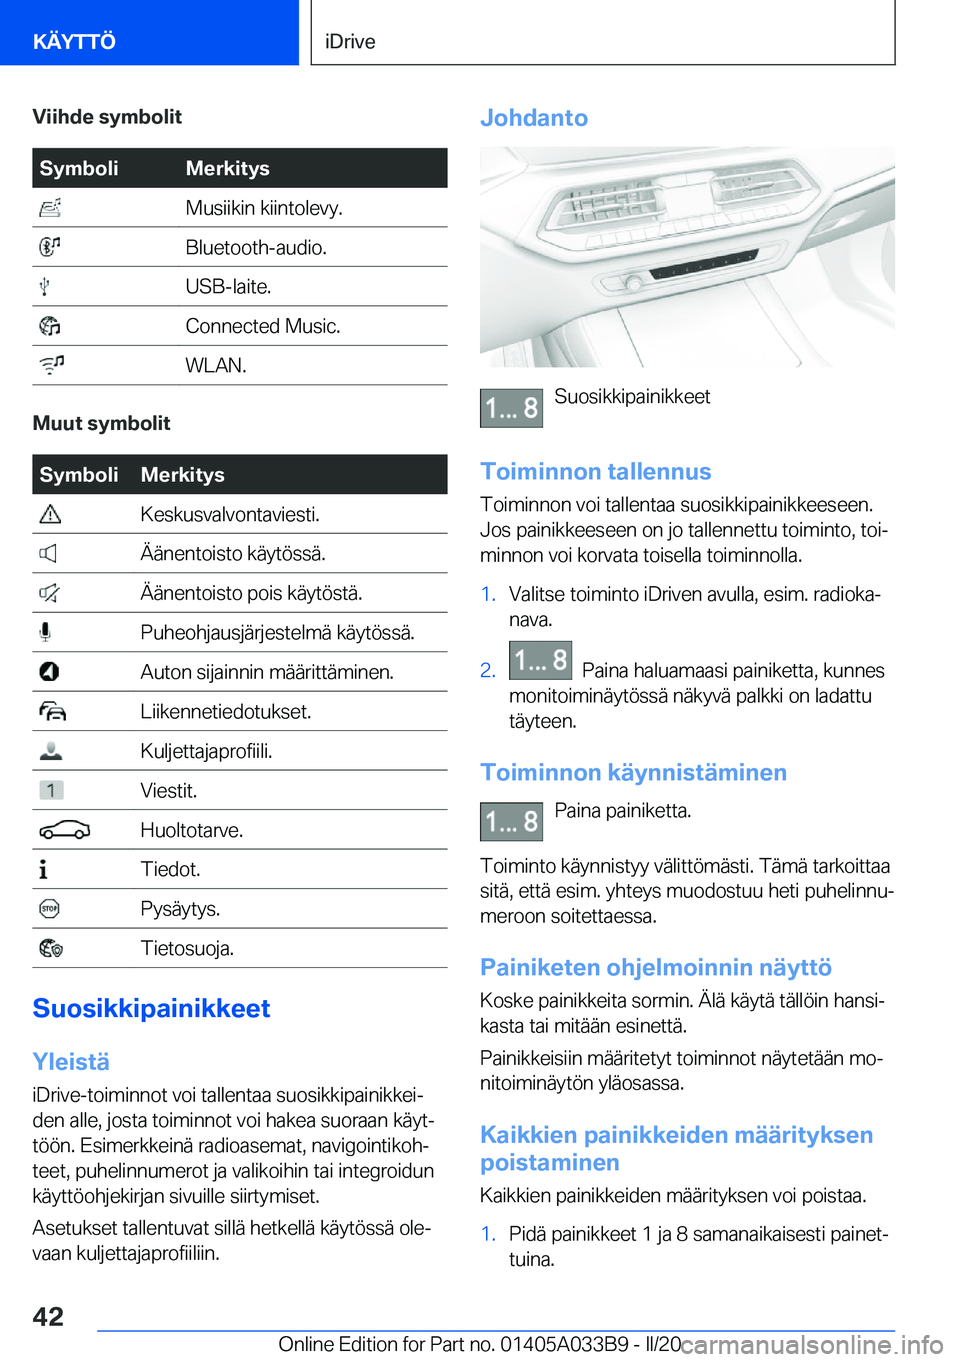 BMW M8 GRAN COUPE 2020  Omistajan Käsikirja (in Finnish) �V�i�i�h�d�e��s�y�m�b�o�l�i�t�S�y�m�b�o�l�i�M�e�r�k�i�t�y�s��M�u�s�i�i�k�i�n��k�i�i�n�t�o�l�e�v�y�.��B�l�u�e�t�o�o�t�h�-�a�u�d�i�o�.��U�S�B�-�l�a�i�t�e�.��C�o�n�n�e�c�t�e�d��M�u�s�i�c�.��W�L�A